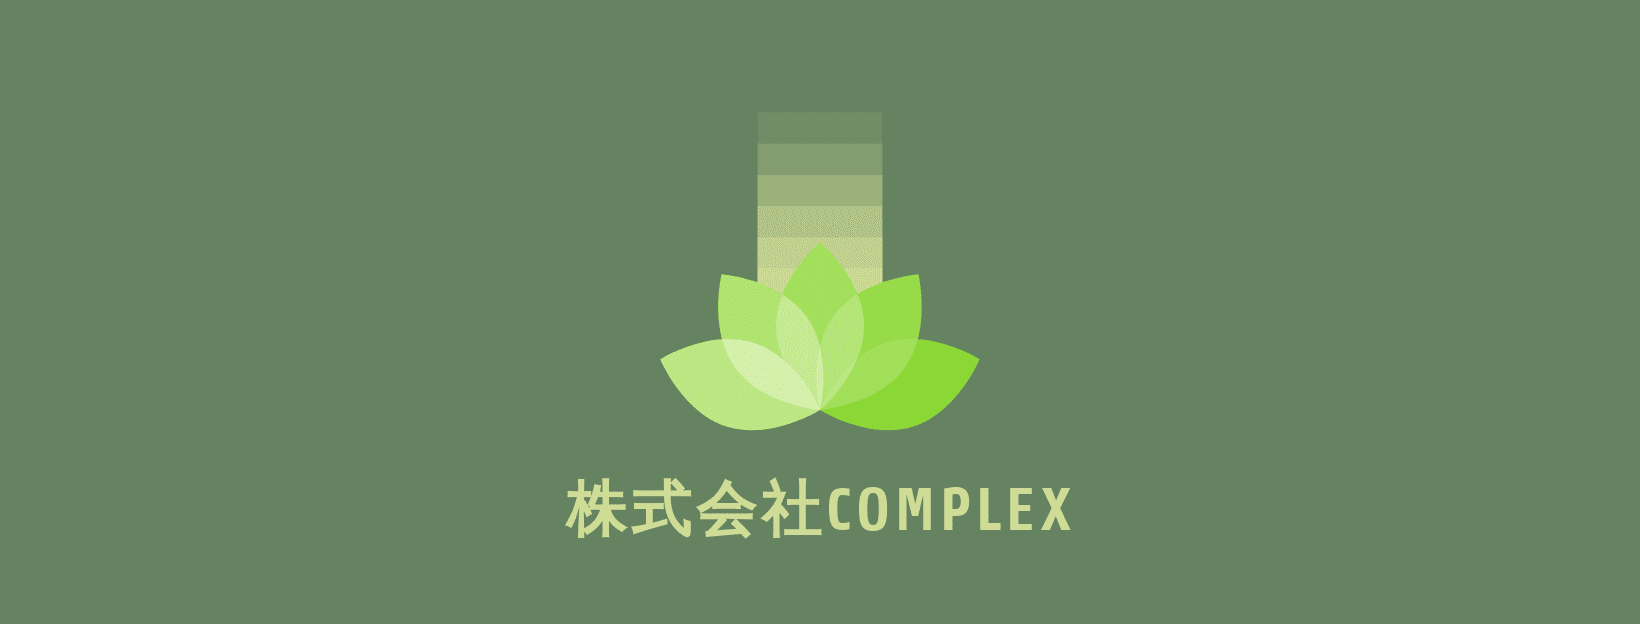 株式会社COMPLEX